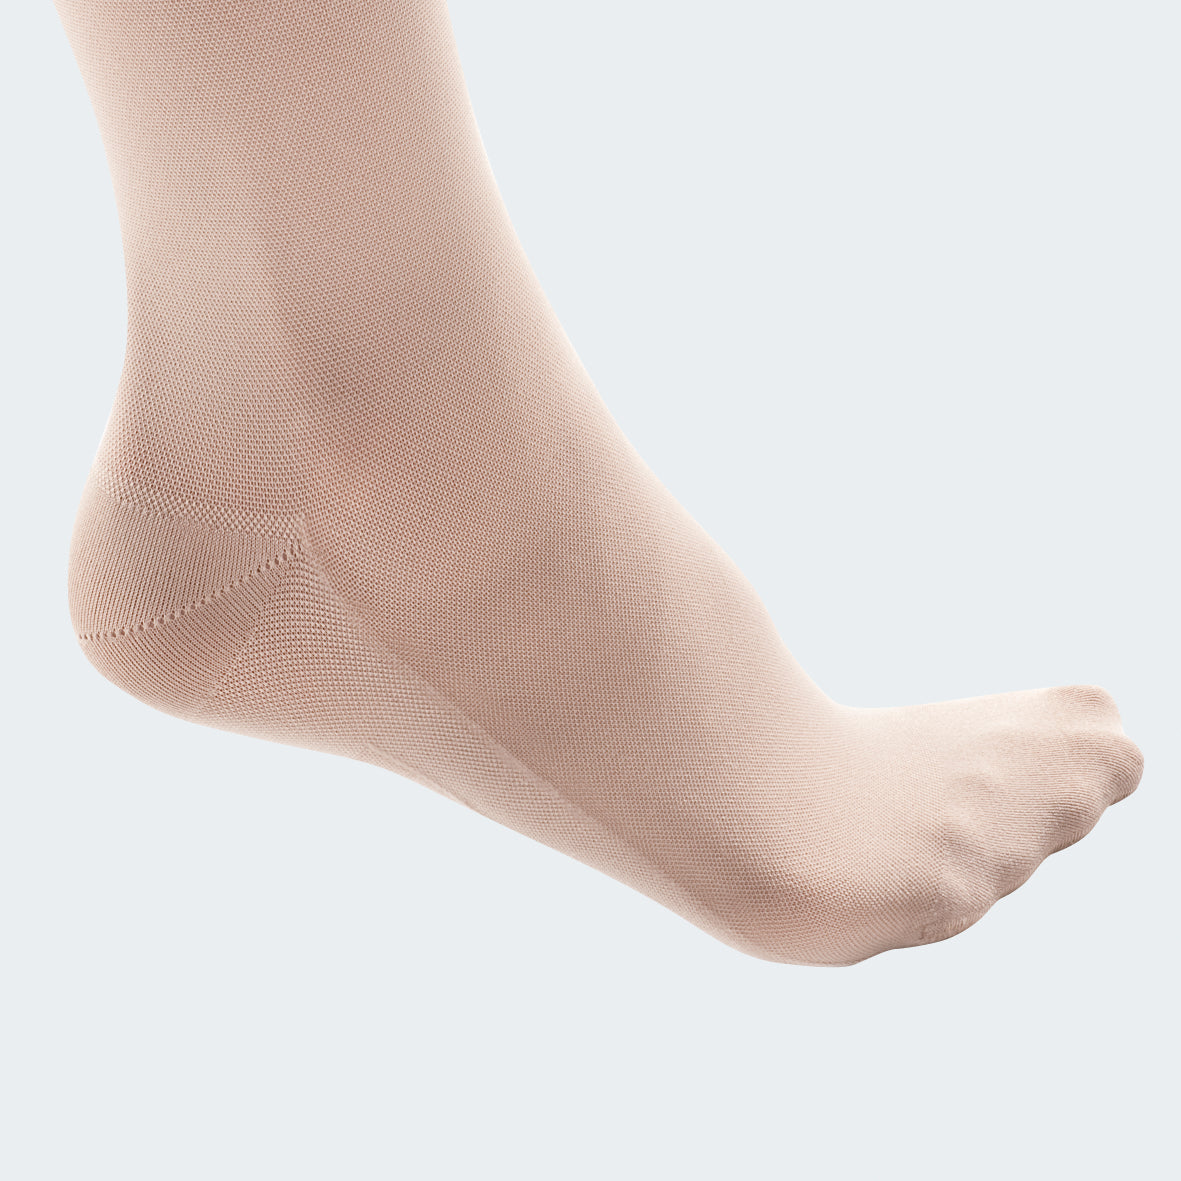 mediven comfort 20-30 mmHg thigh beaded topband closed toe standard